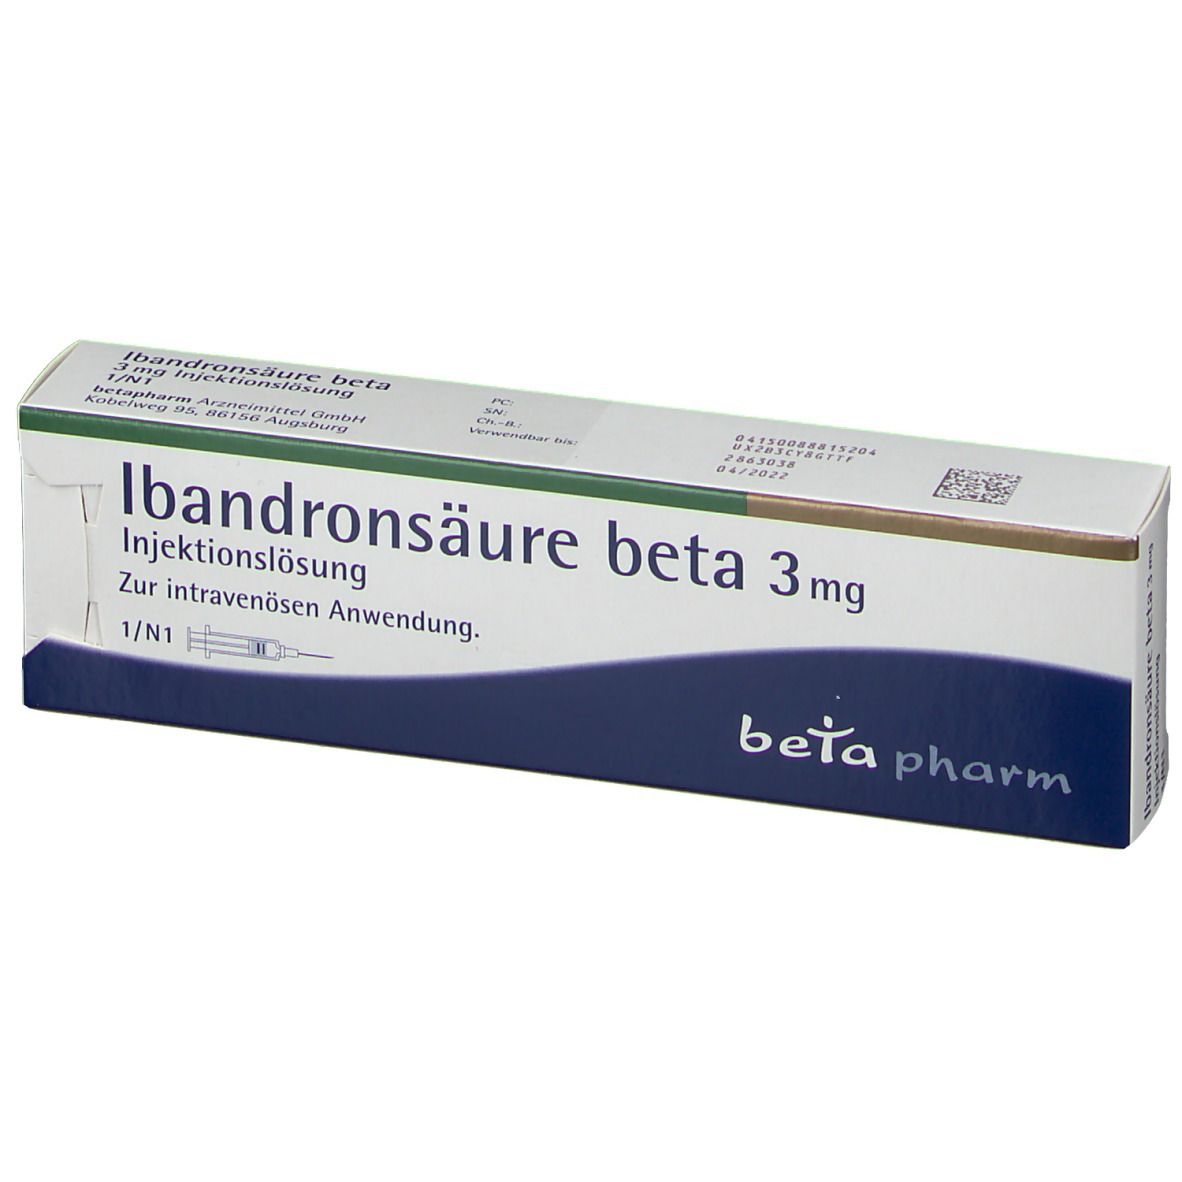 Ibandronsäure beta 3 mg